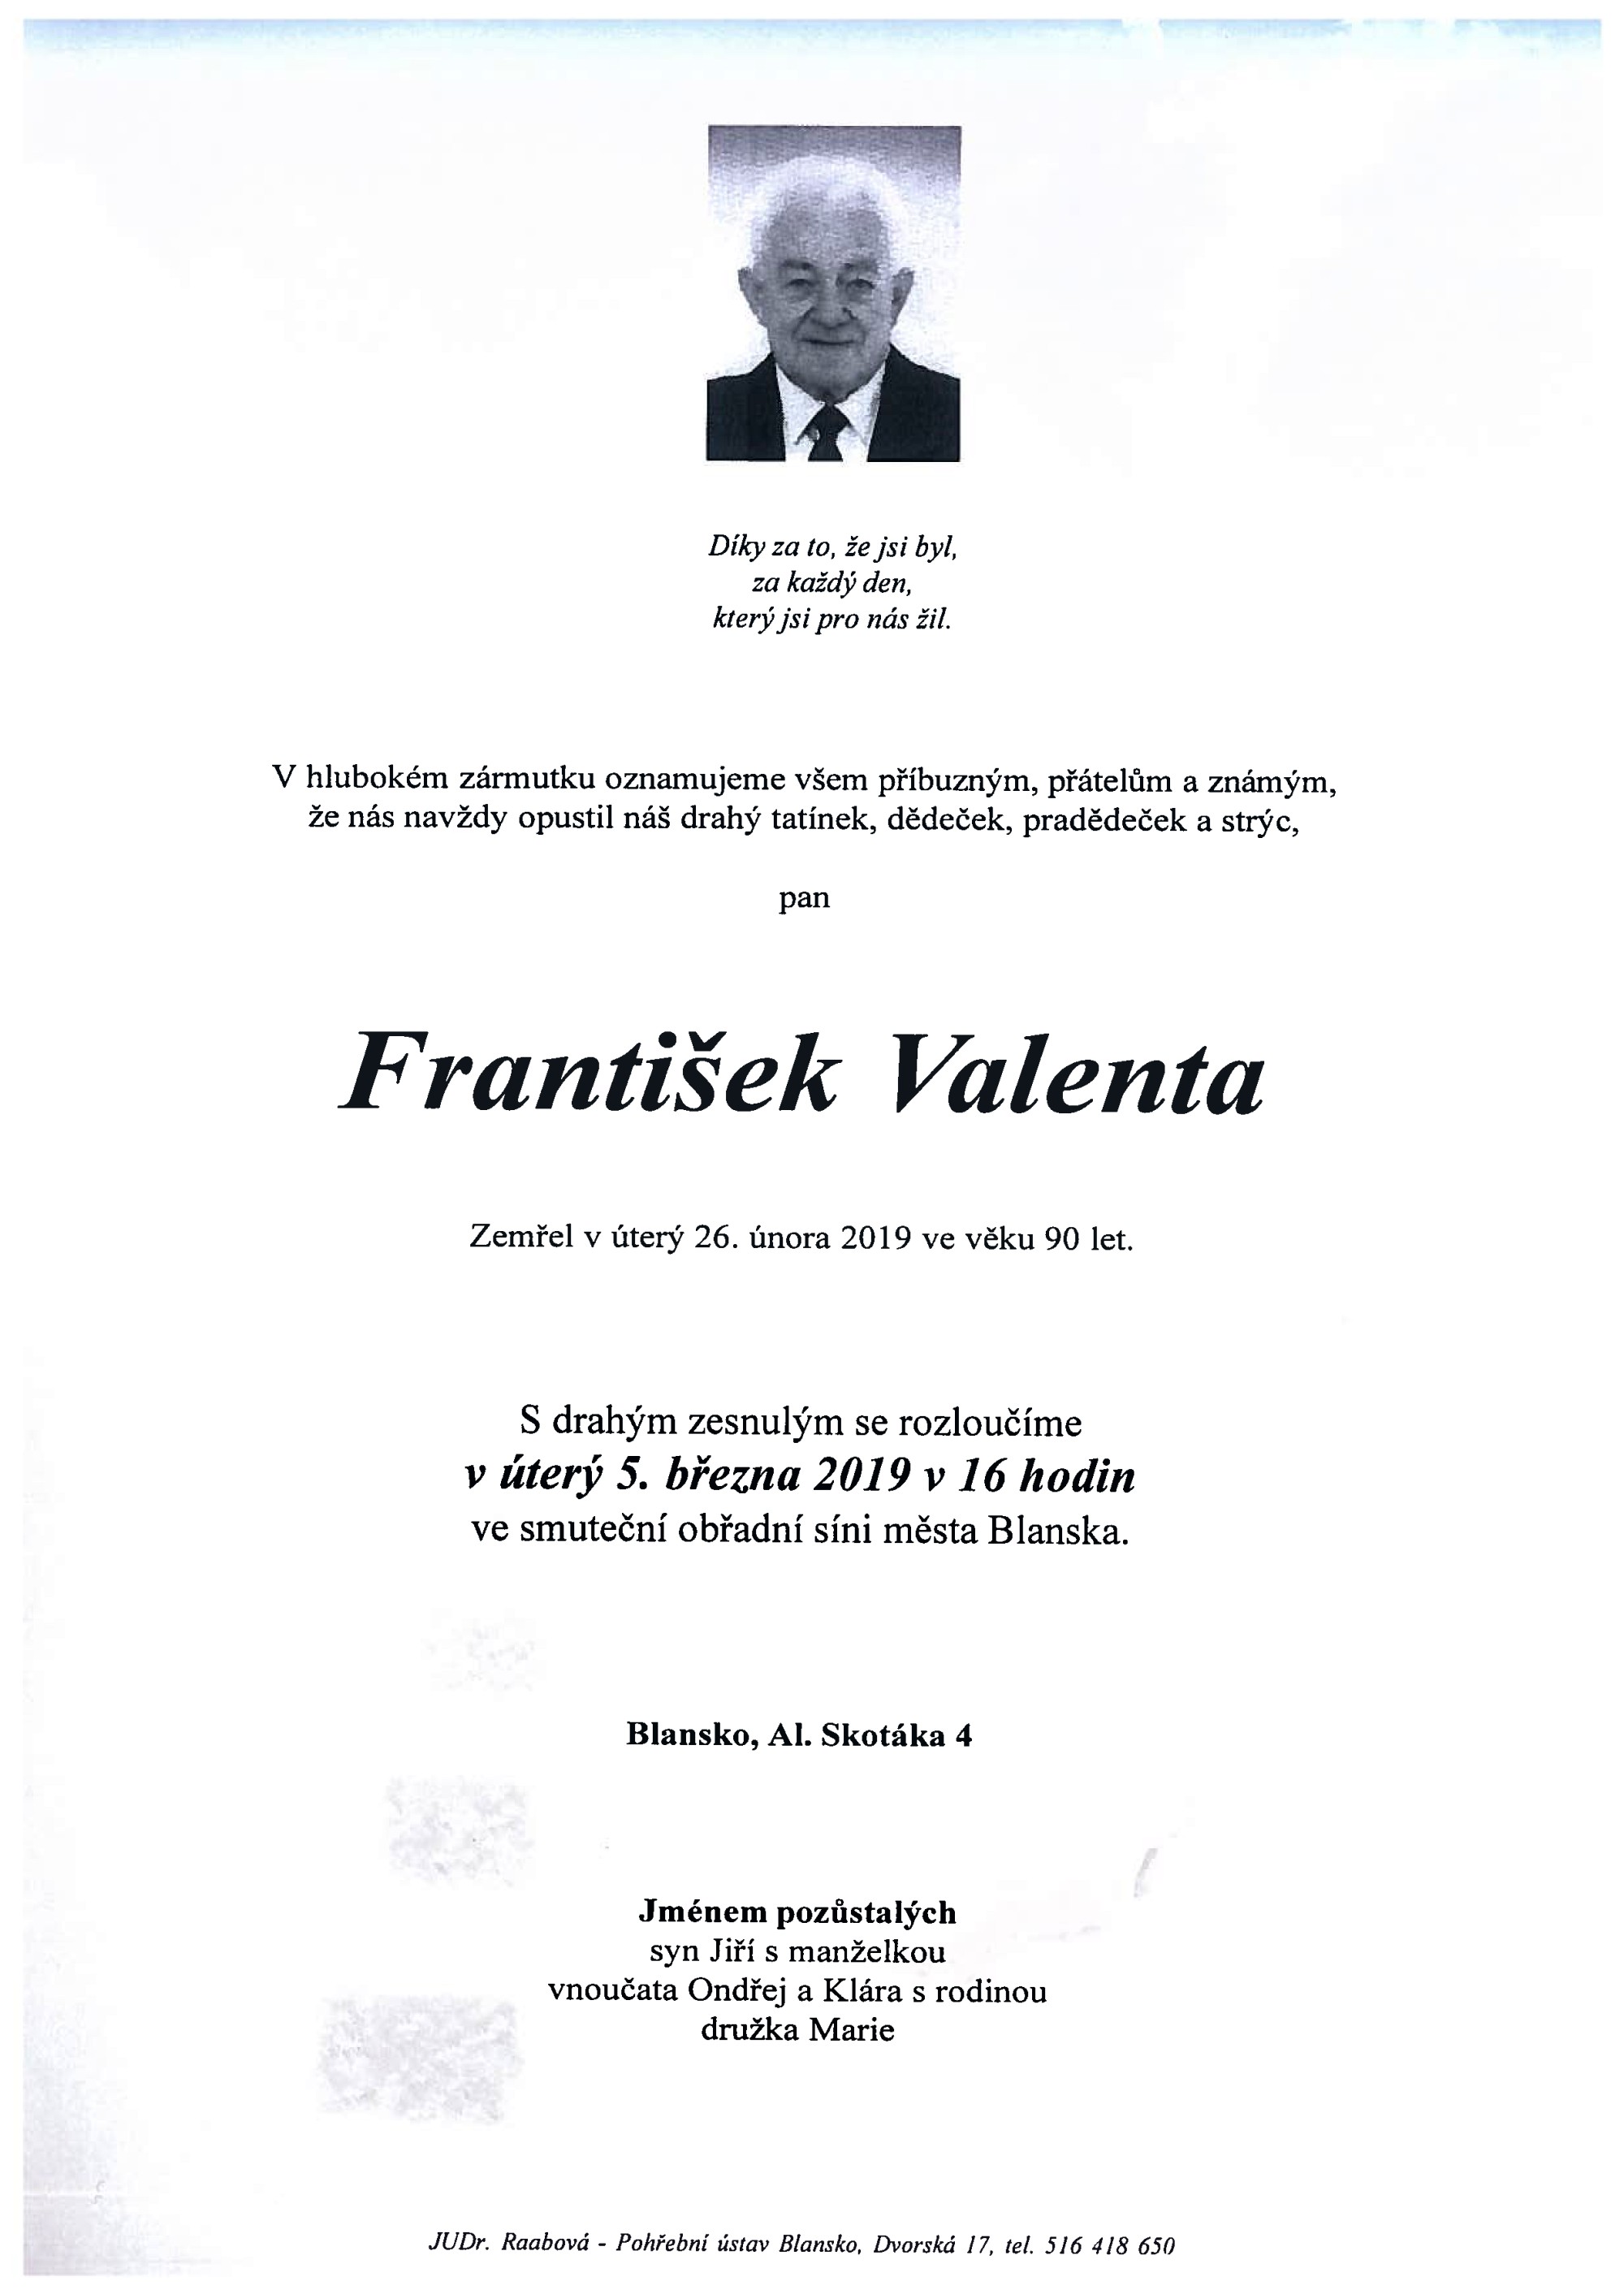 František Valenta